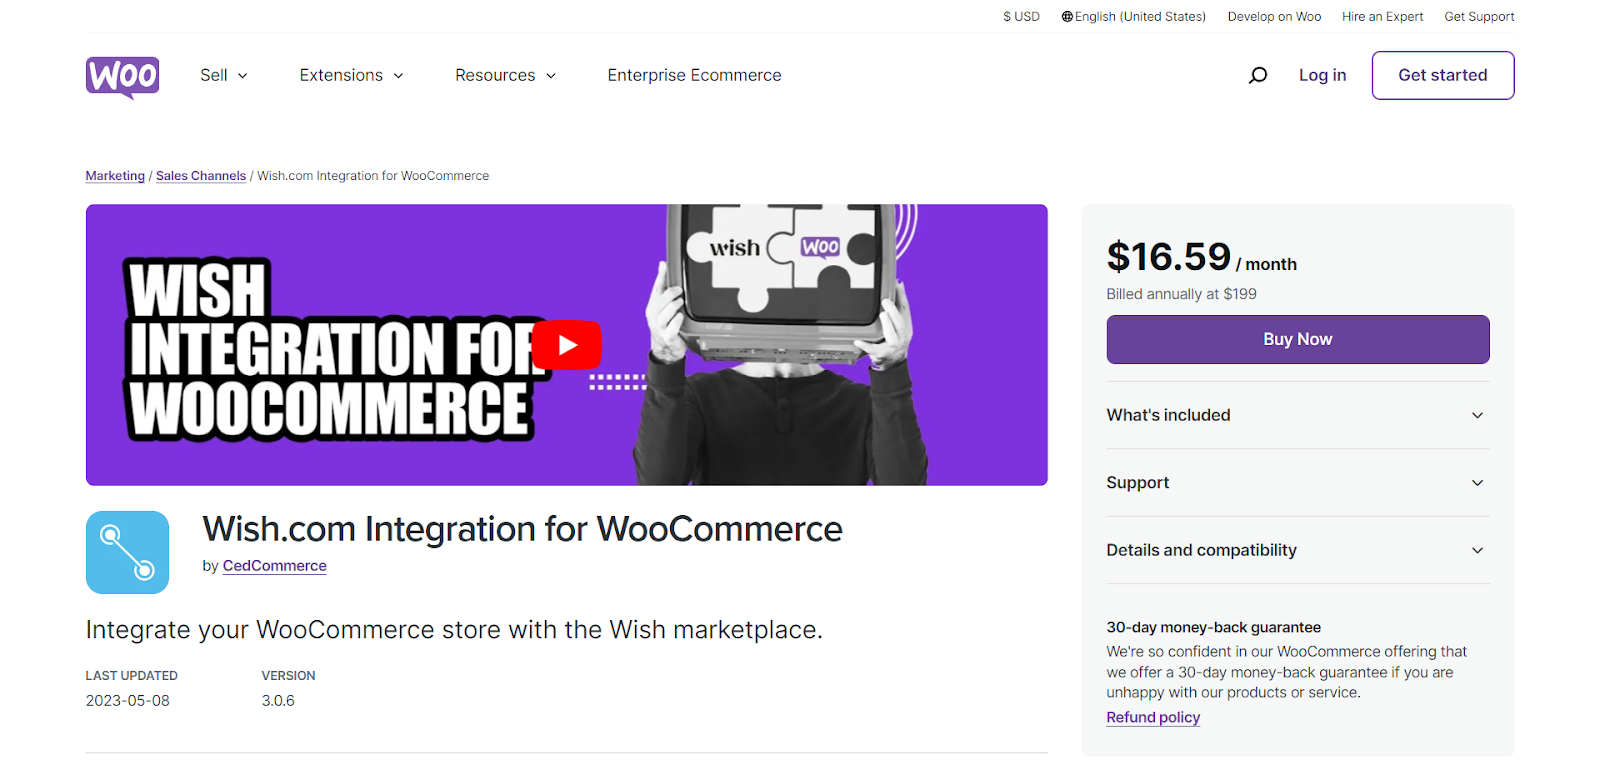 Wish.com Integration for WooCommerce